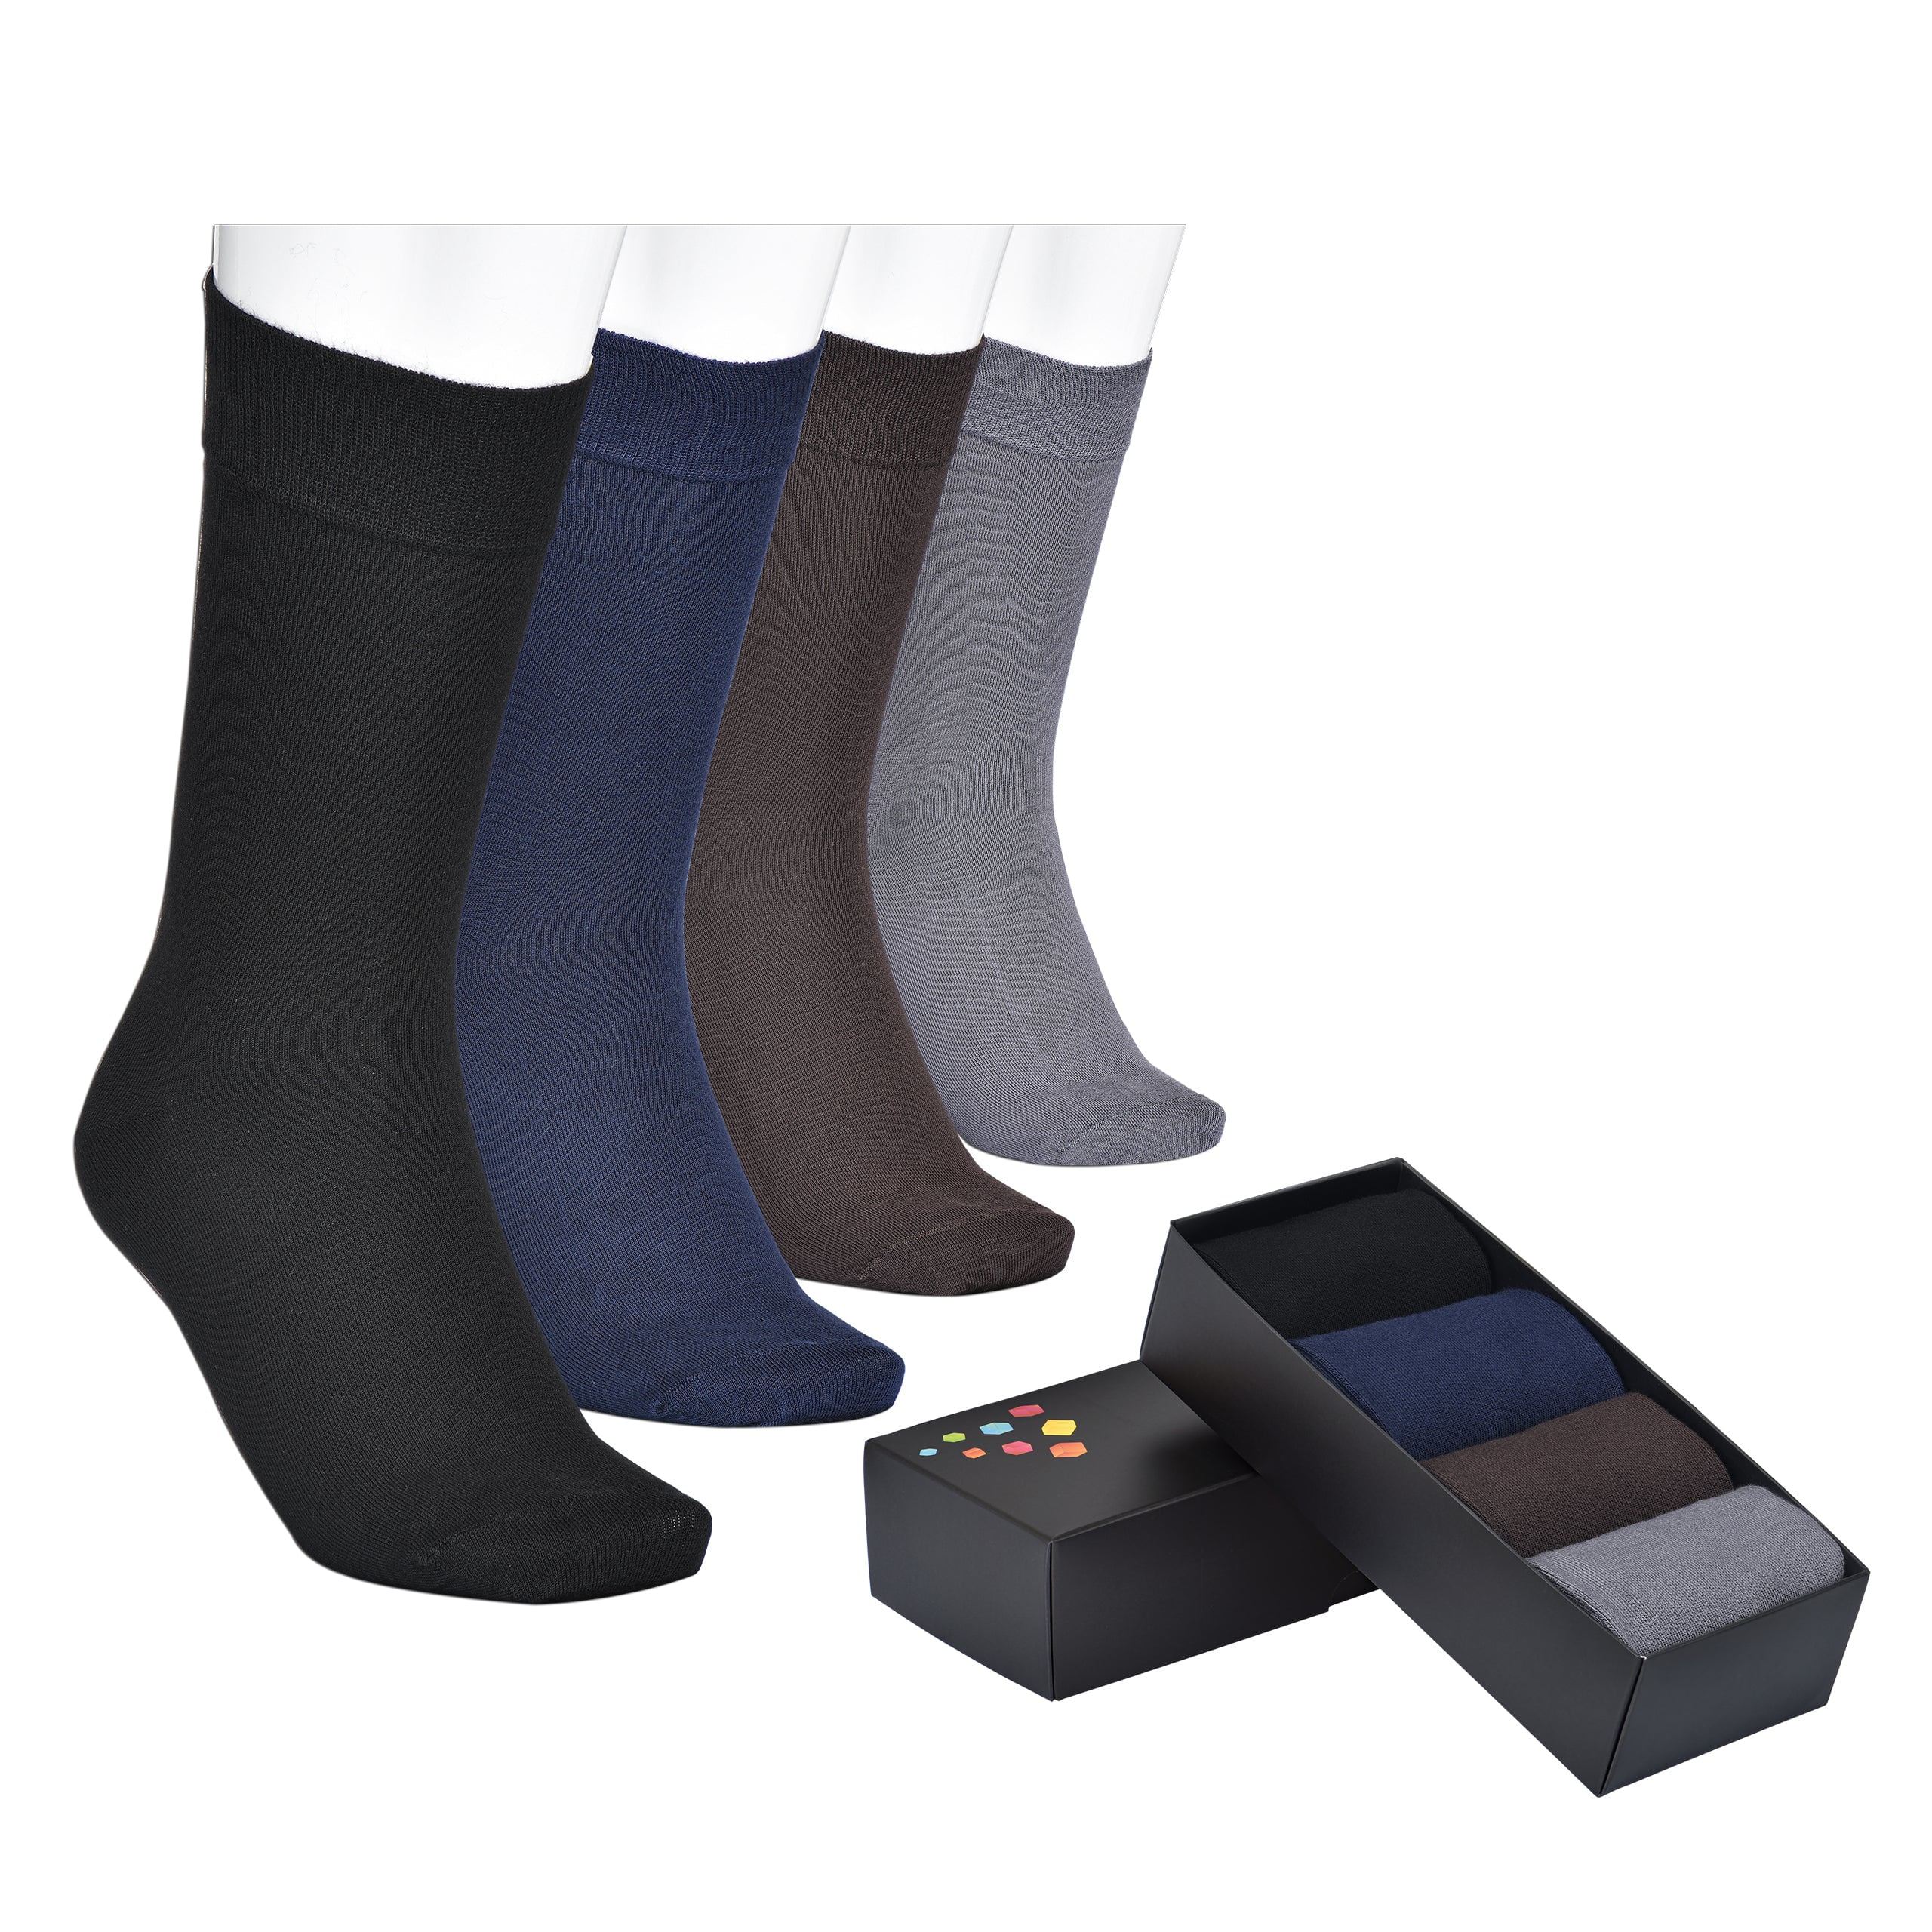 ELYFER Men's Cotton Dress Crew Socks - 4 Pairs with Gift Box - Ultra ...